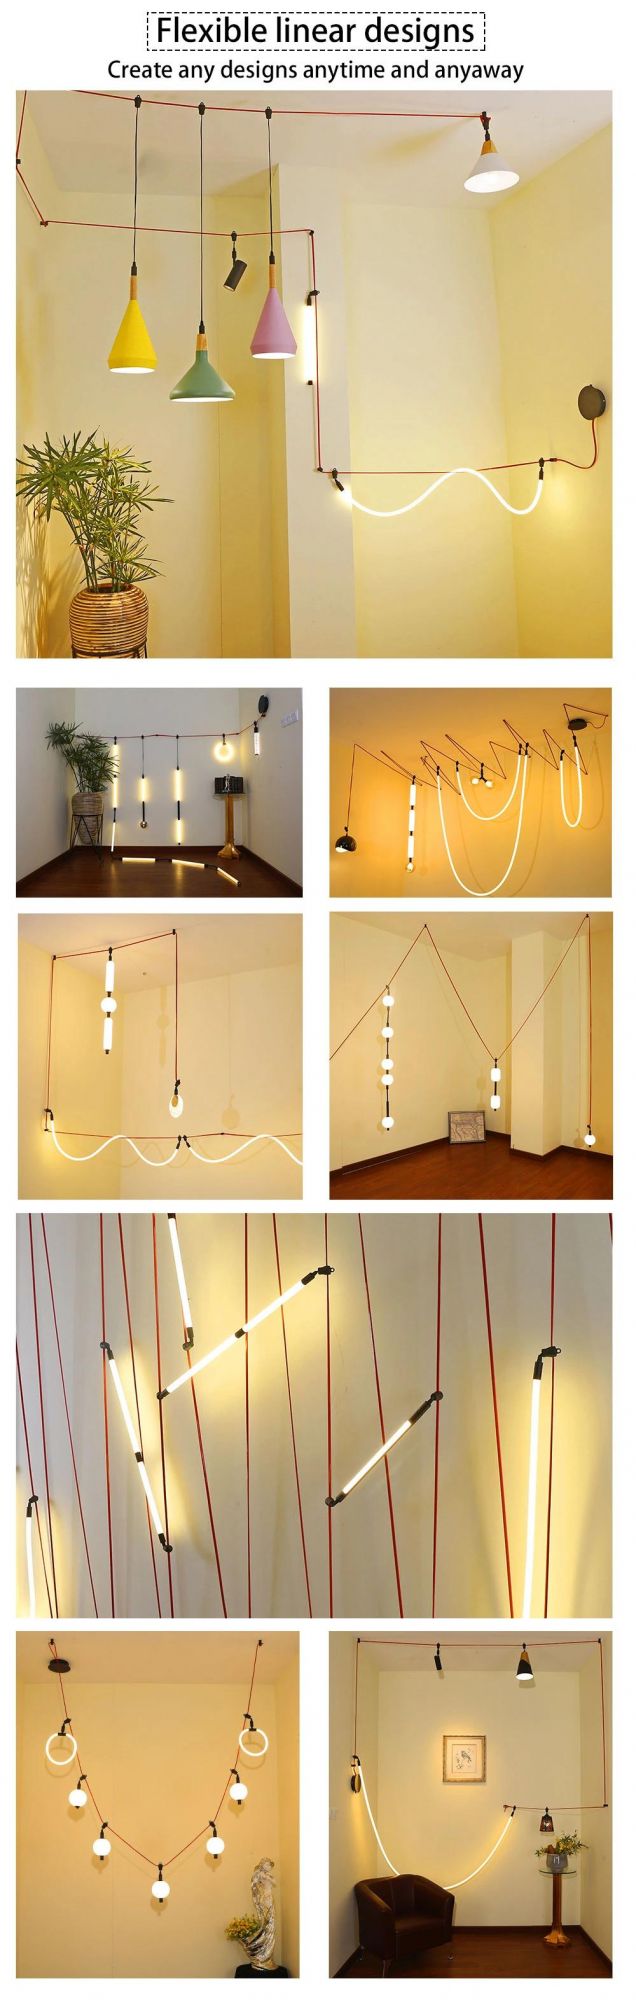 LED Indoor Hot Designer Flexible Linear 3000K/6000K Glass Acrylic Shade Decoration Chandelier Pendant Ceiling Spot Track Lamp Light